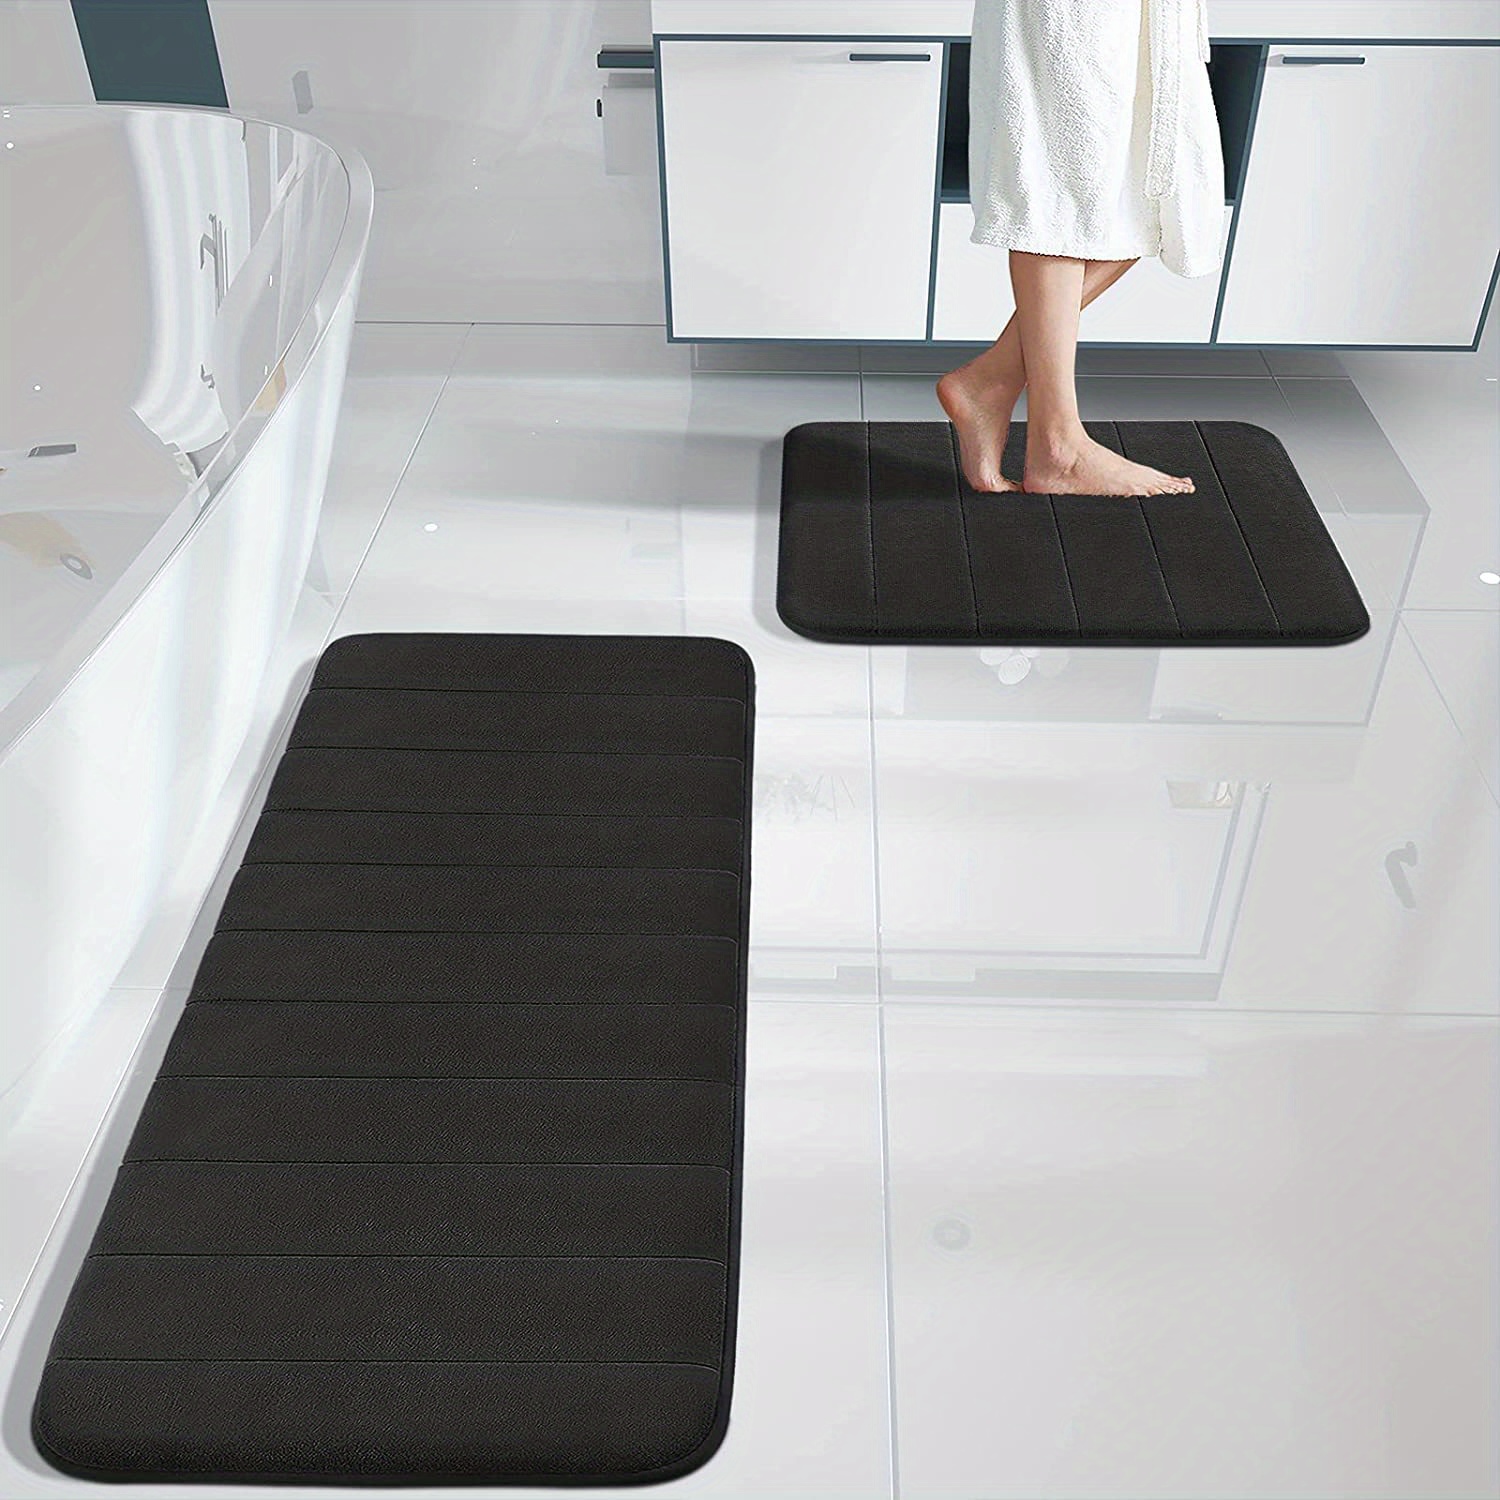 Black Bathroom Rugs Memory Foam Bath Mats for Bathroom Floor Mats